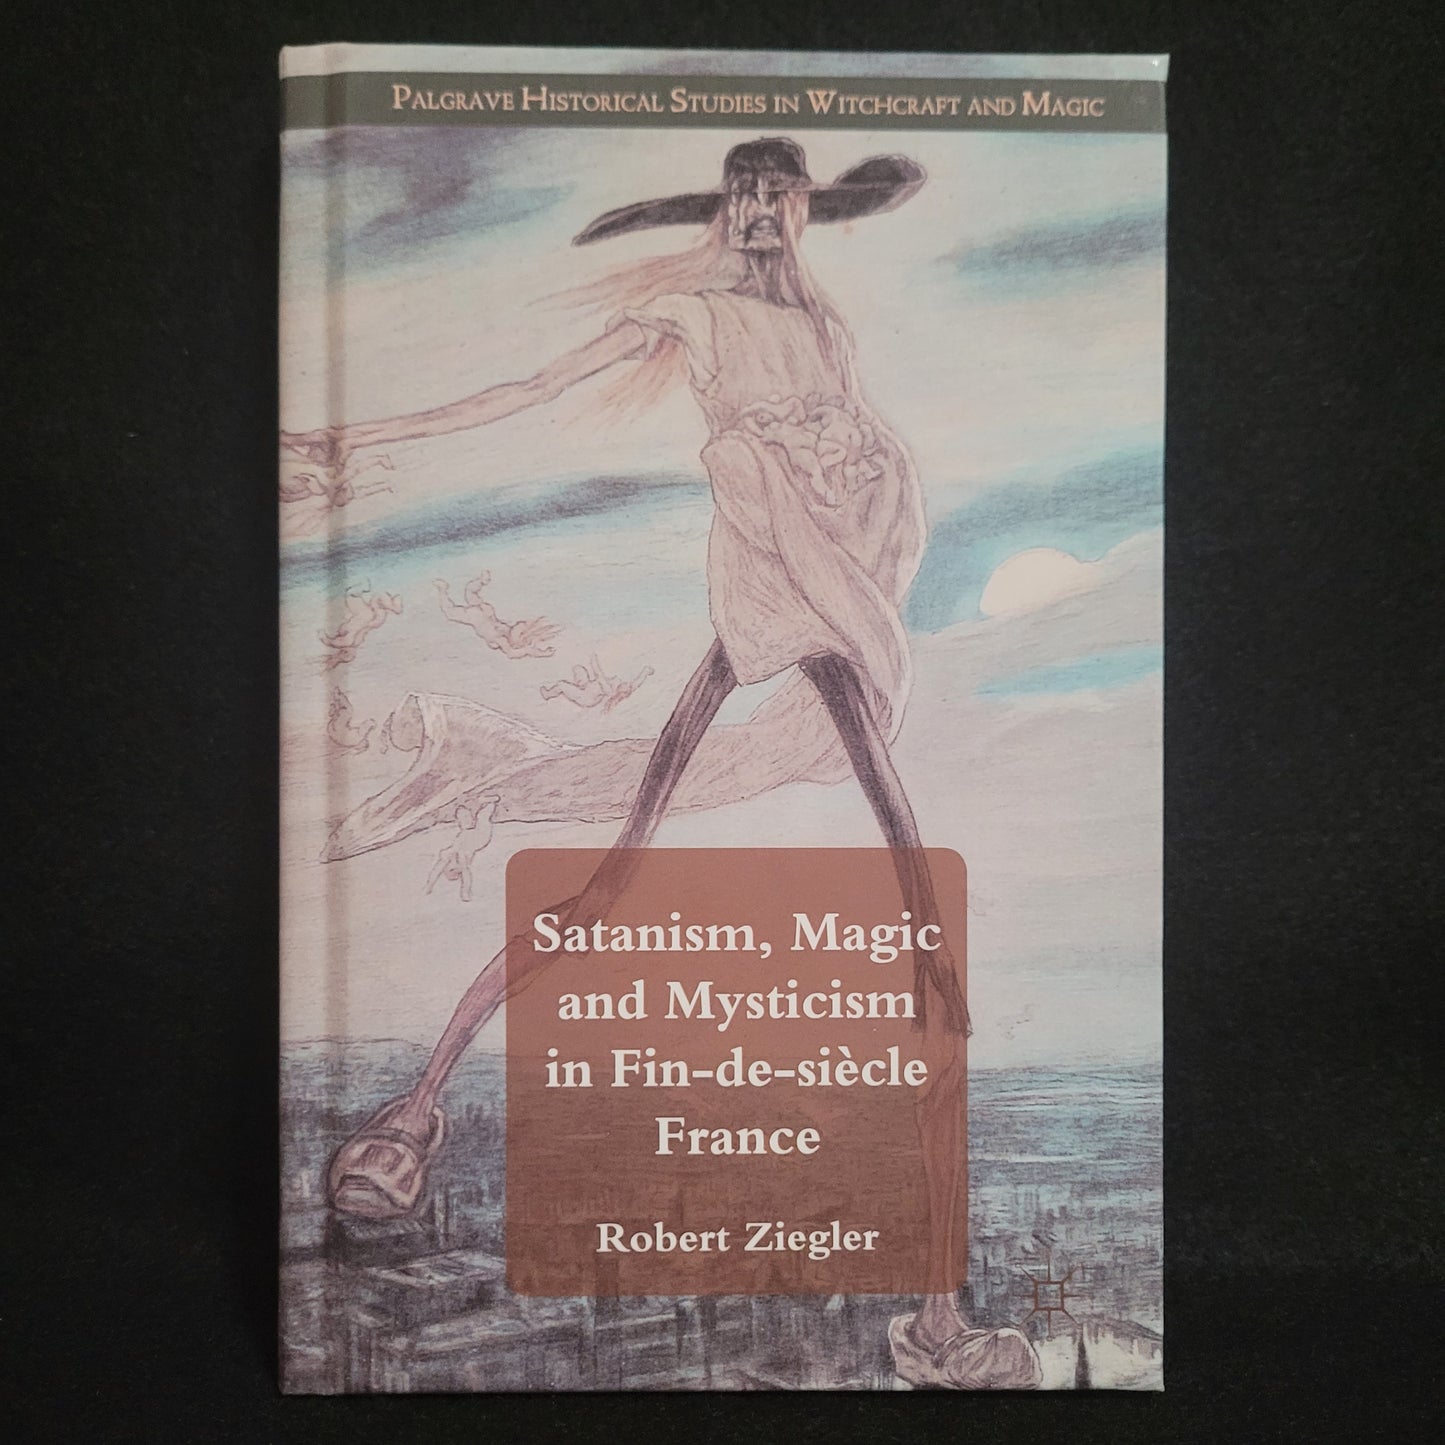 Satanism, Magic and Mysticism in Fin-de-siècle France by Robert Ziegler (Palgrave Macmillan, 2012) Hardcover